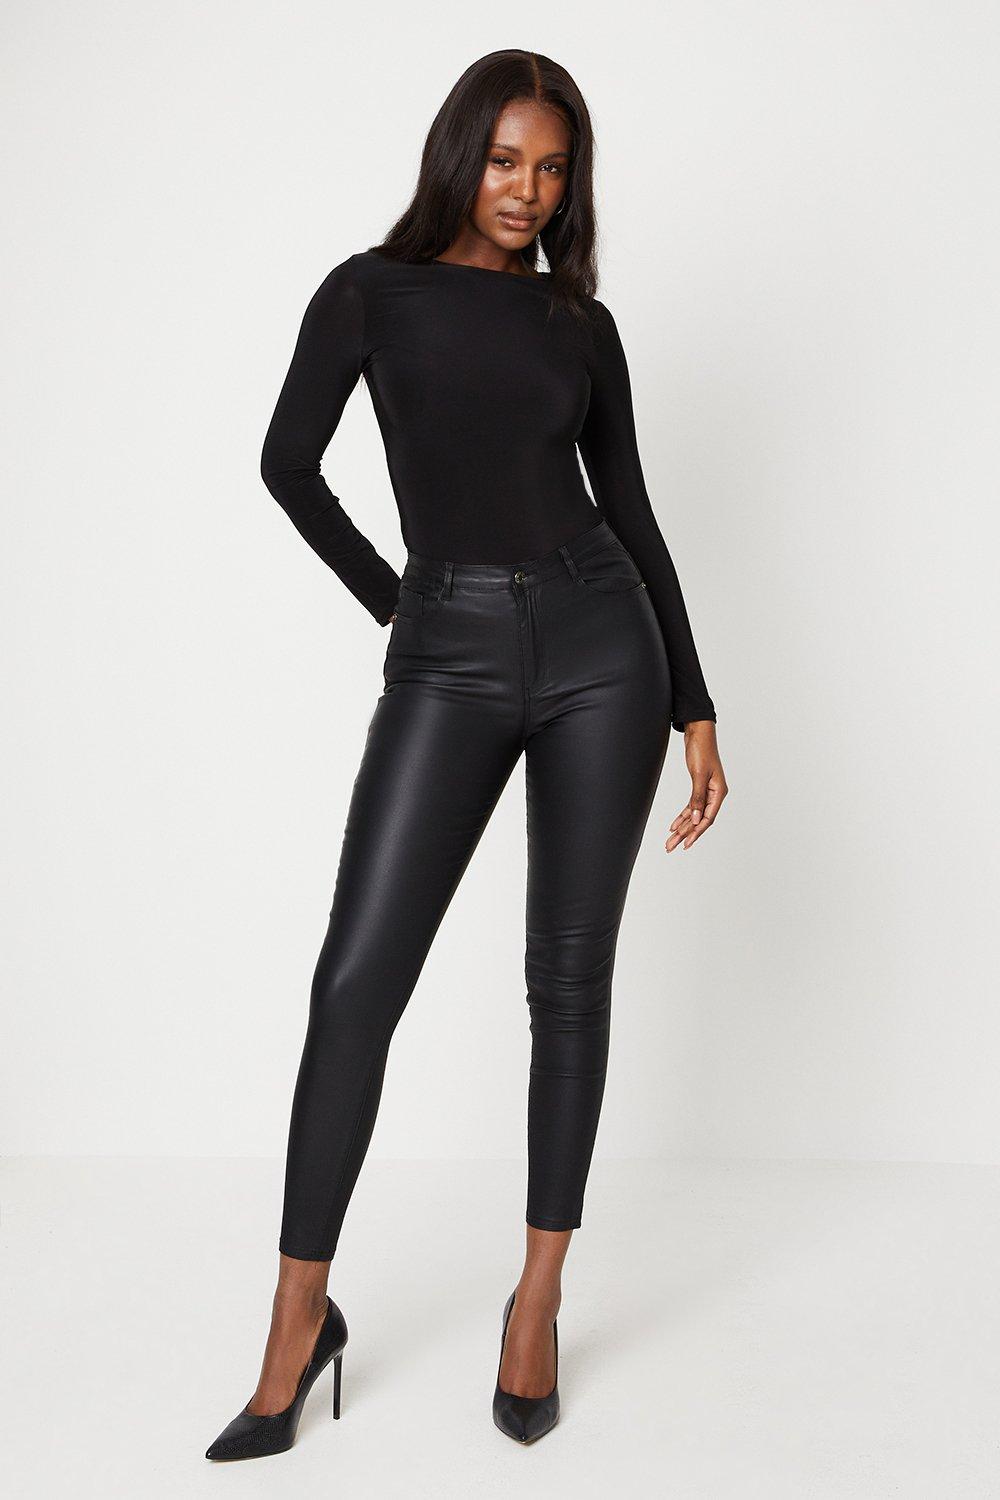 Women’s High Waisted Coated Skinny Jeans - black - M